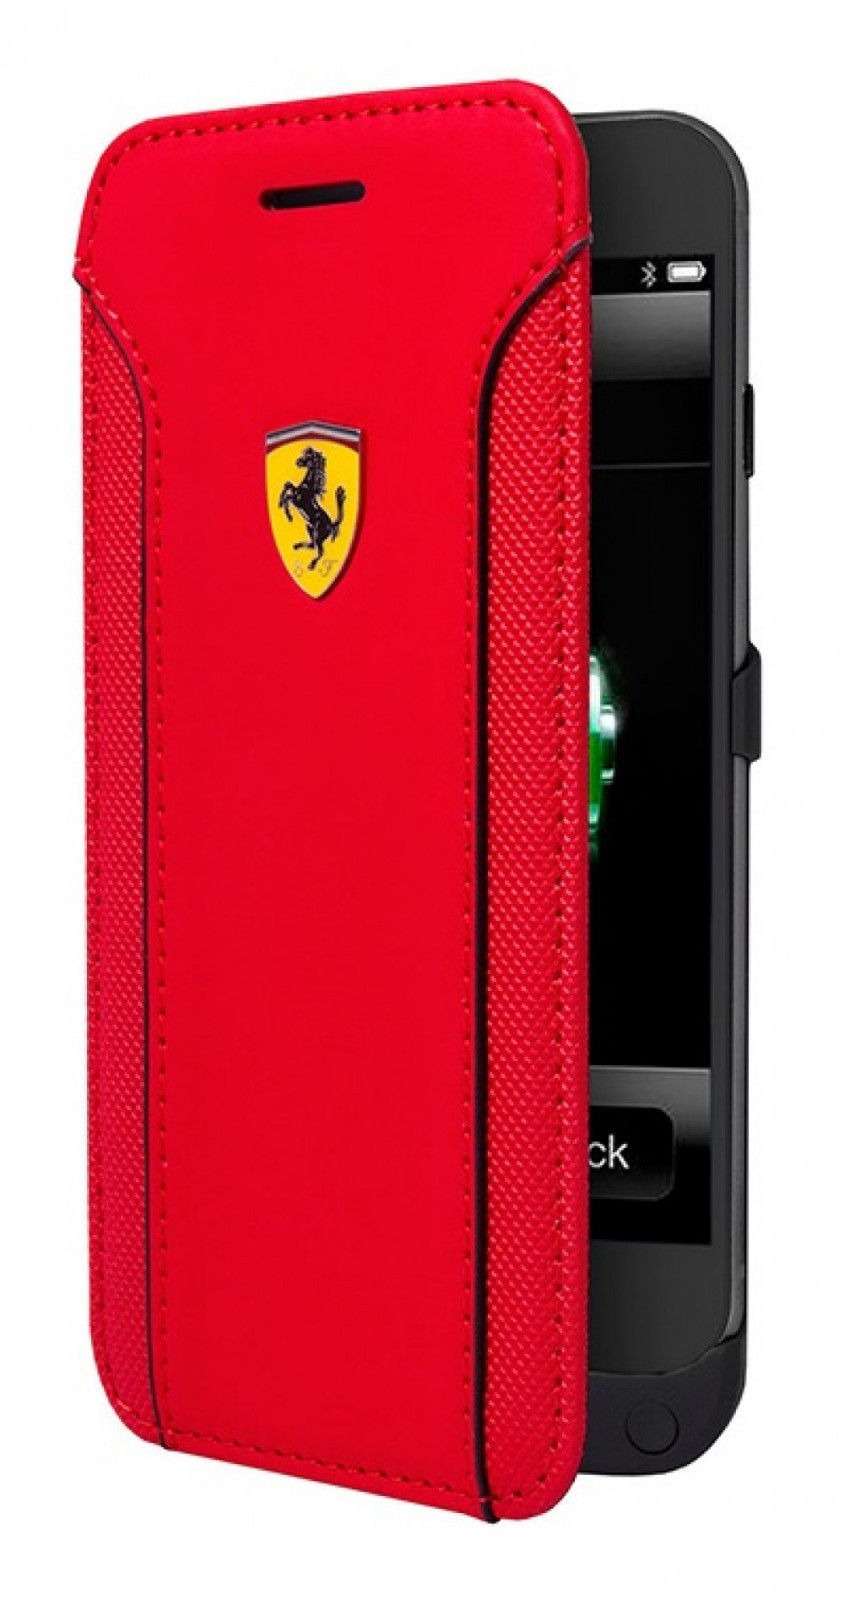 vijand Winkelcentrum sla Official Ferrari Red PU Leather Booktype Case for iPhone 6/6S 4.7"